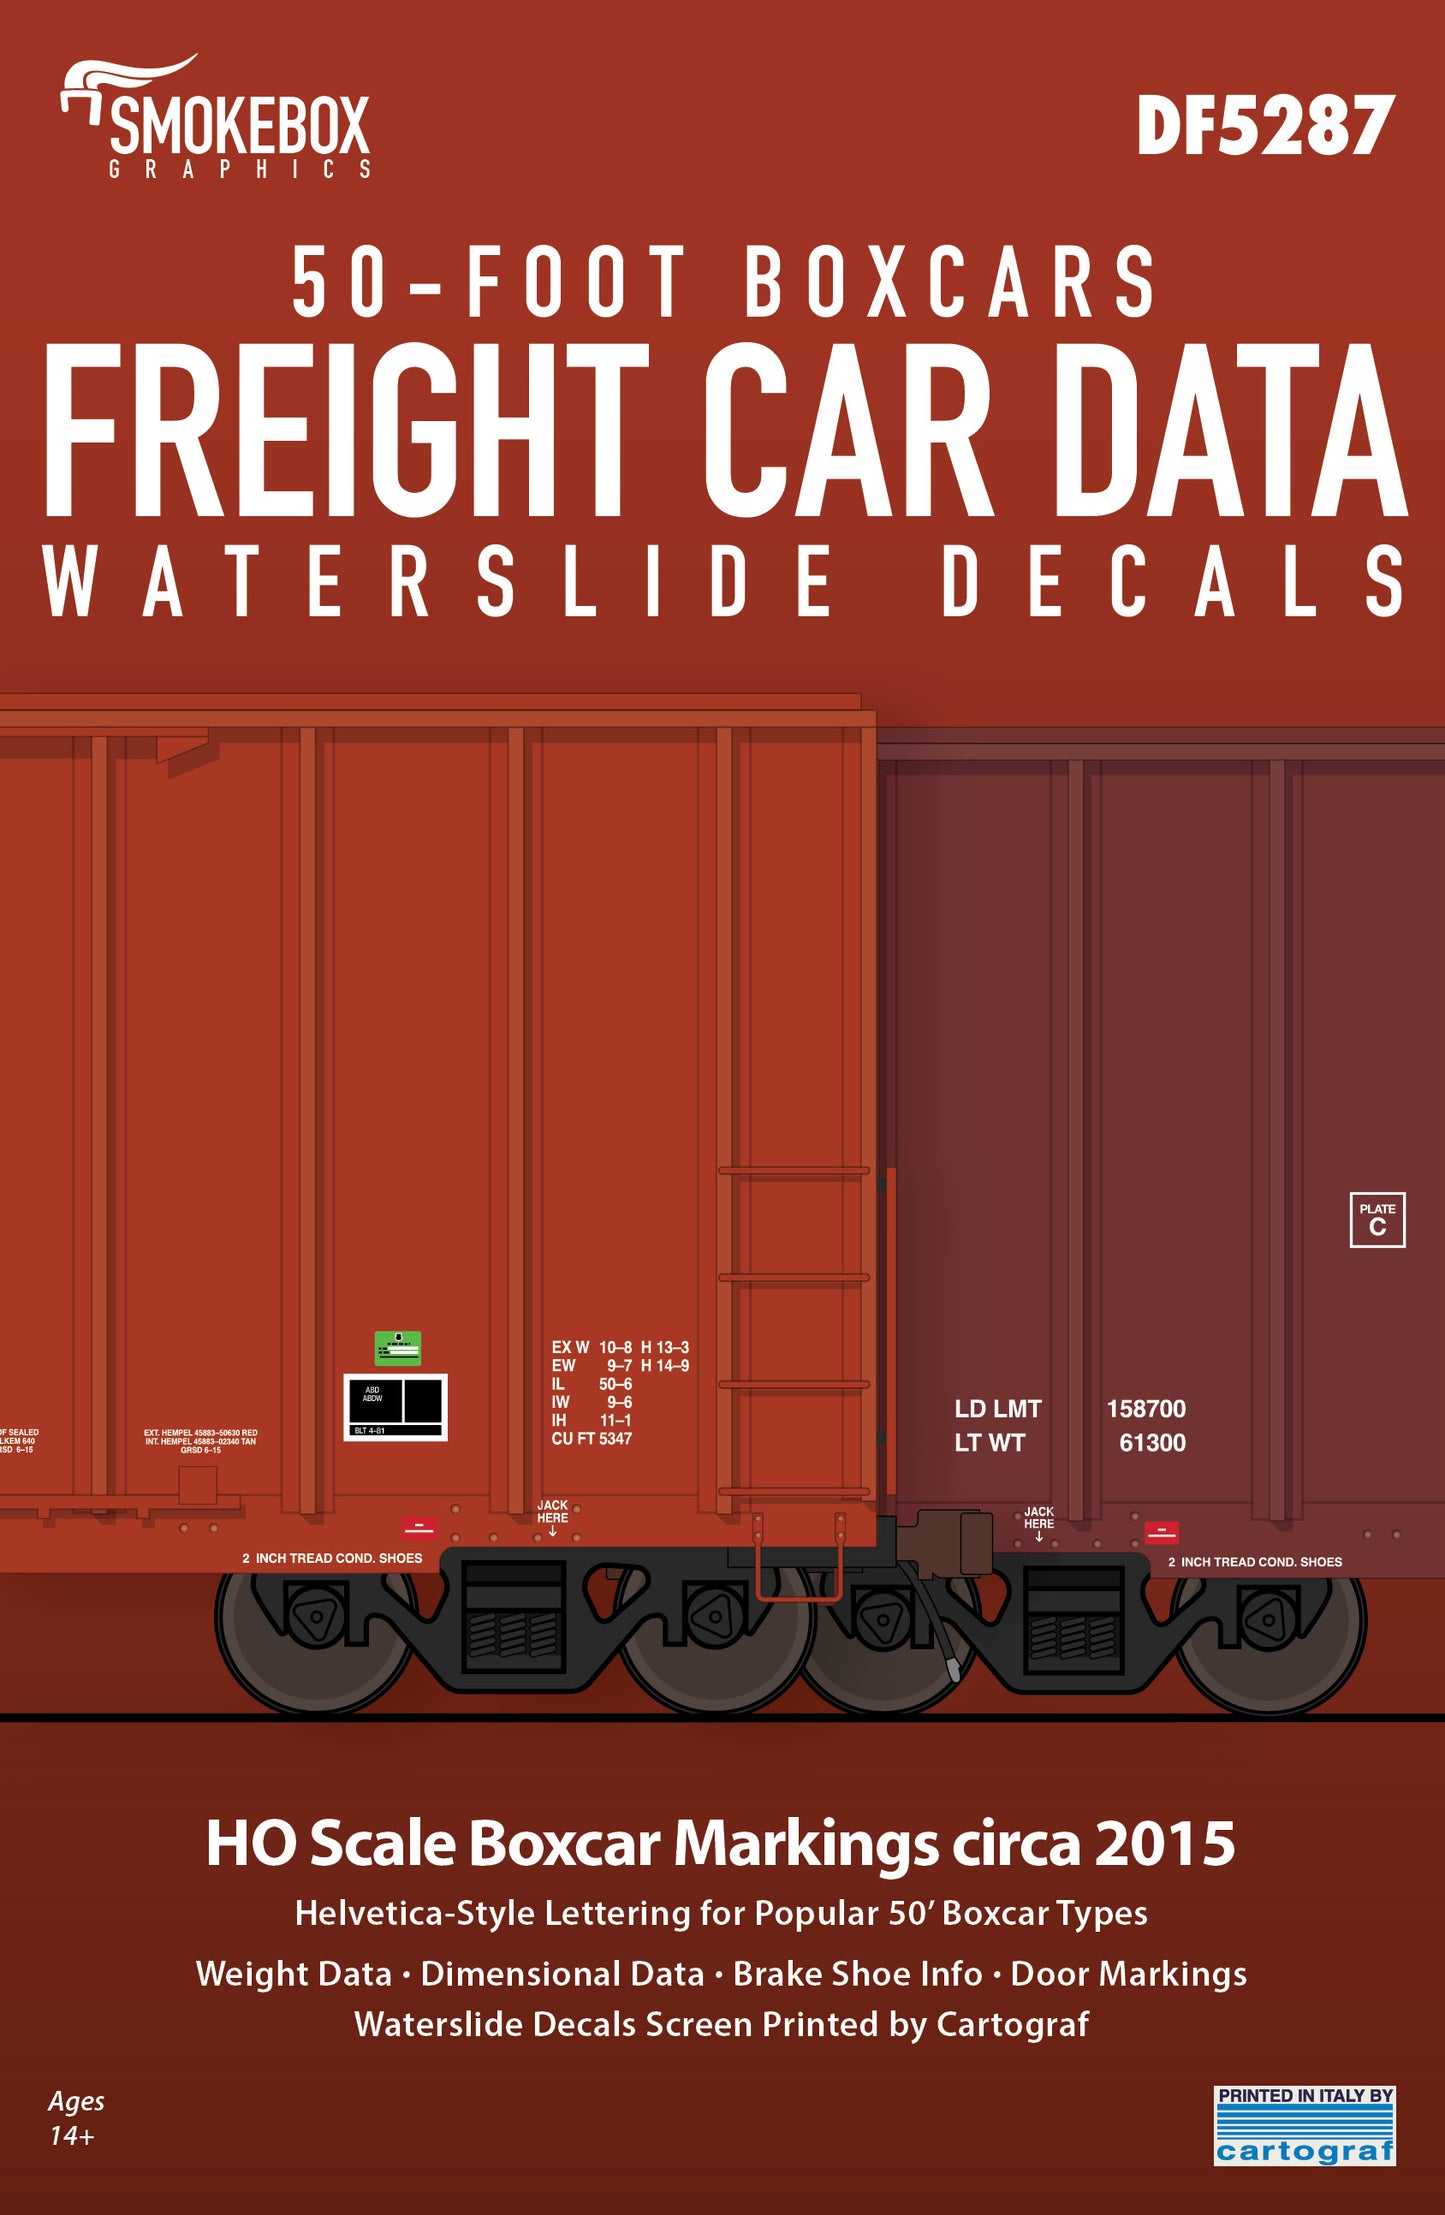 DF5287 Freight Car Data Circa 2015